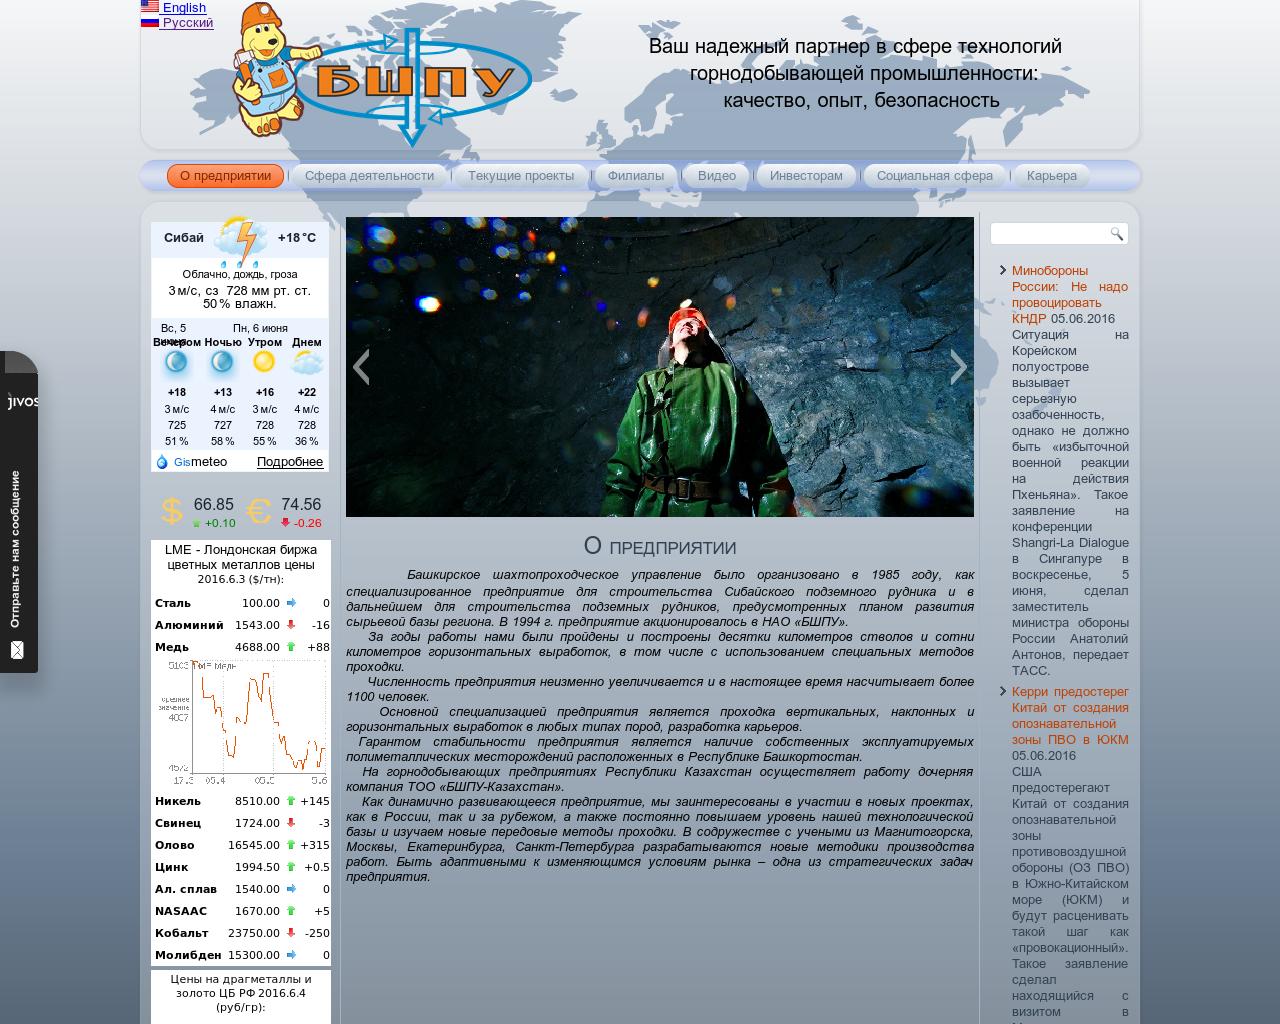 Изображение сайта bshpu.ru в разрешении 1280x1024